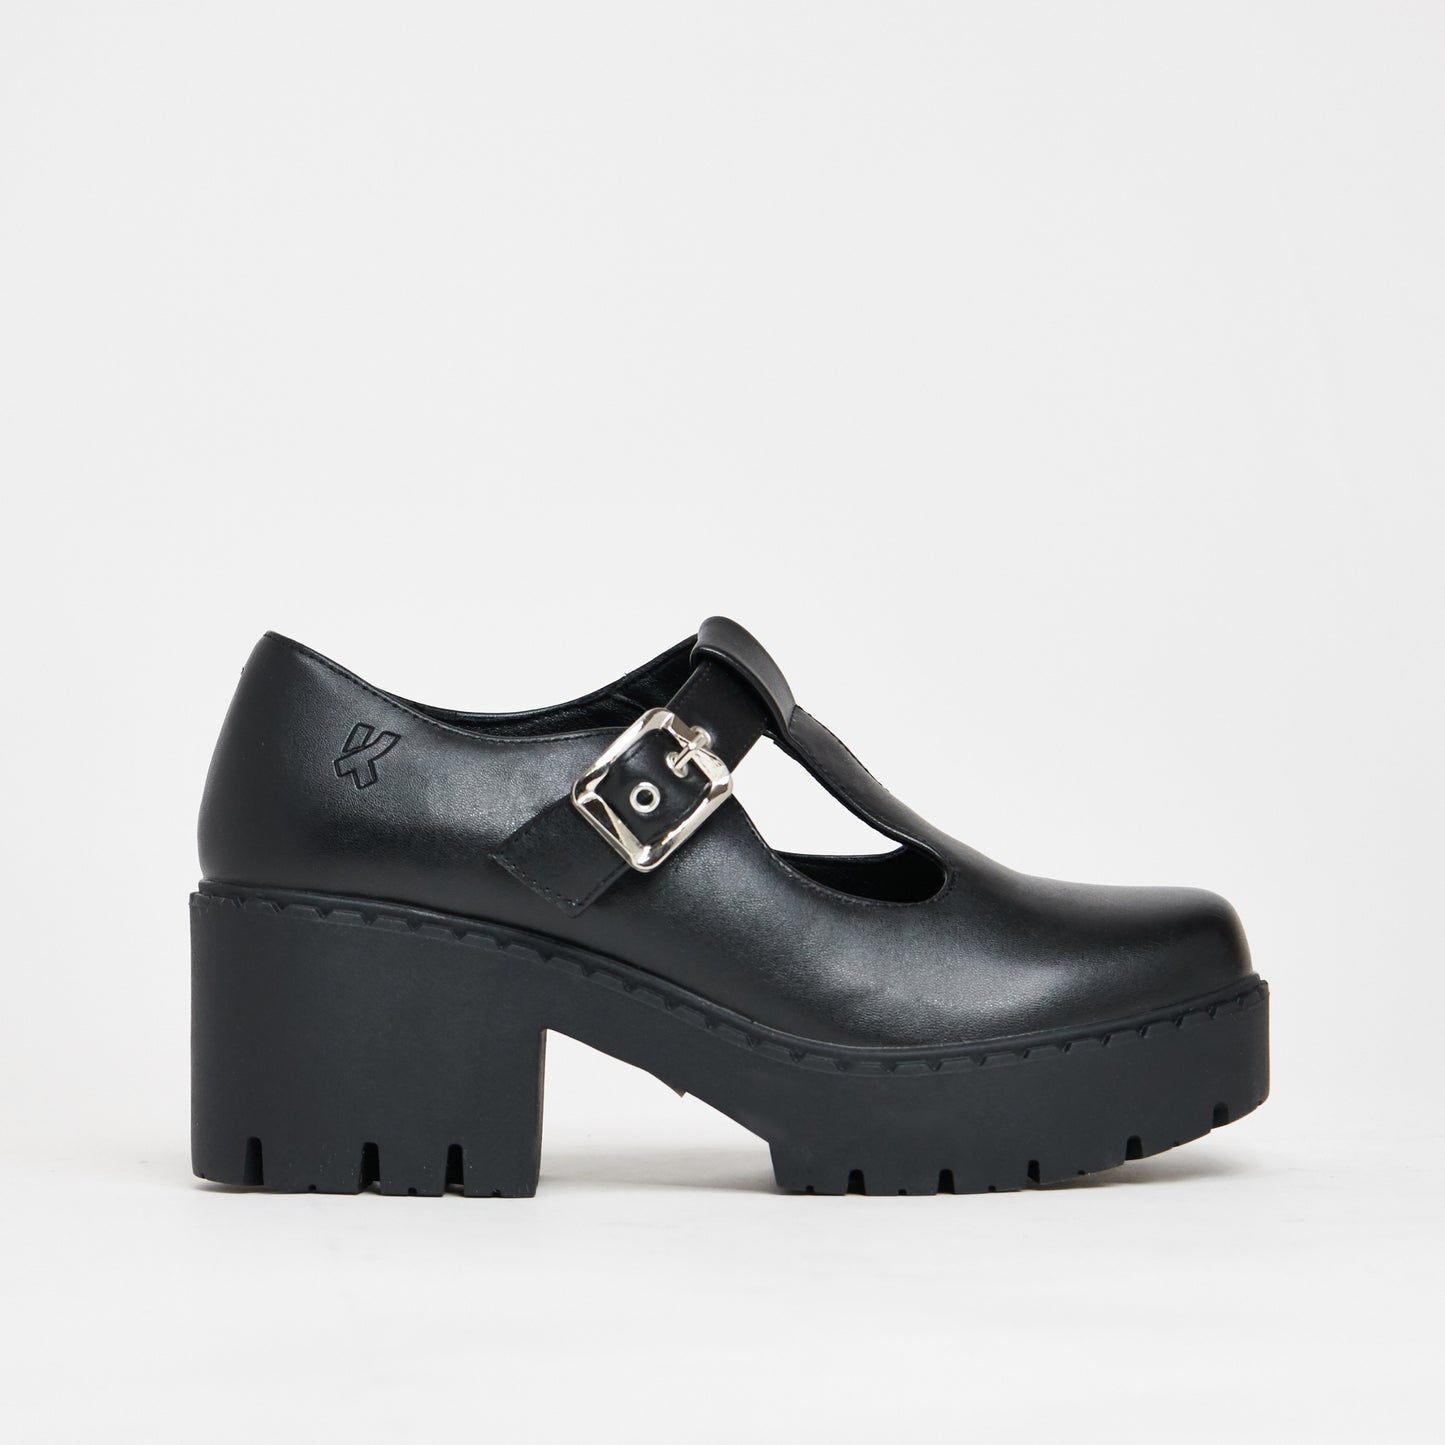 Kazuki Switch Mary Jane Shoes - Mary Janes - KOI Footwear - Black - Side View